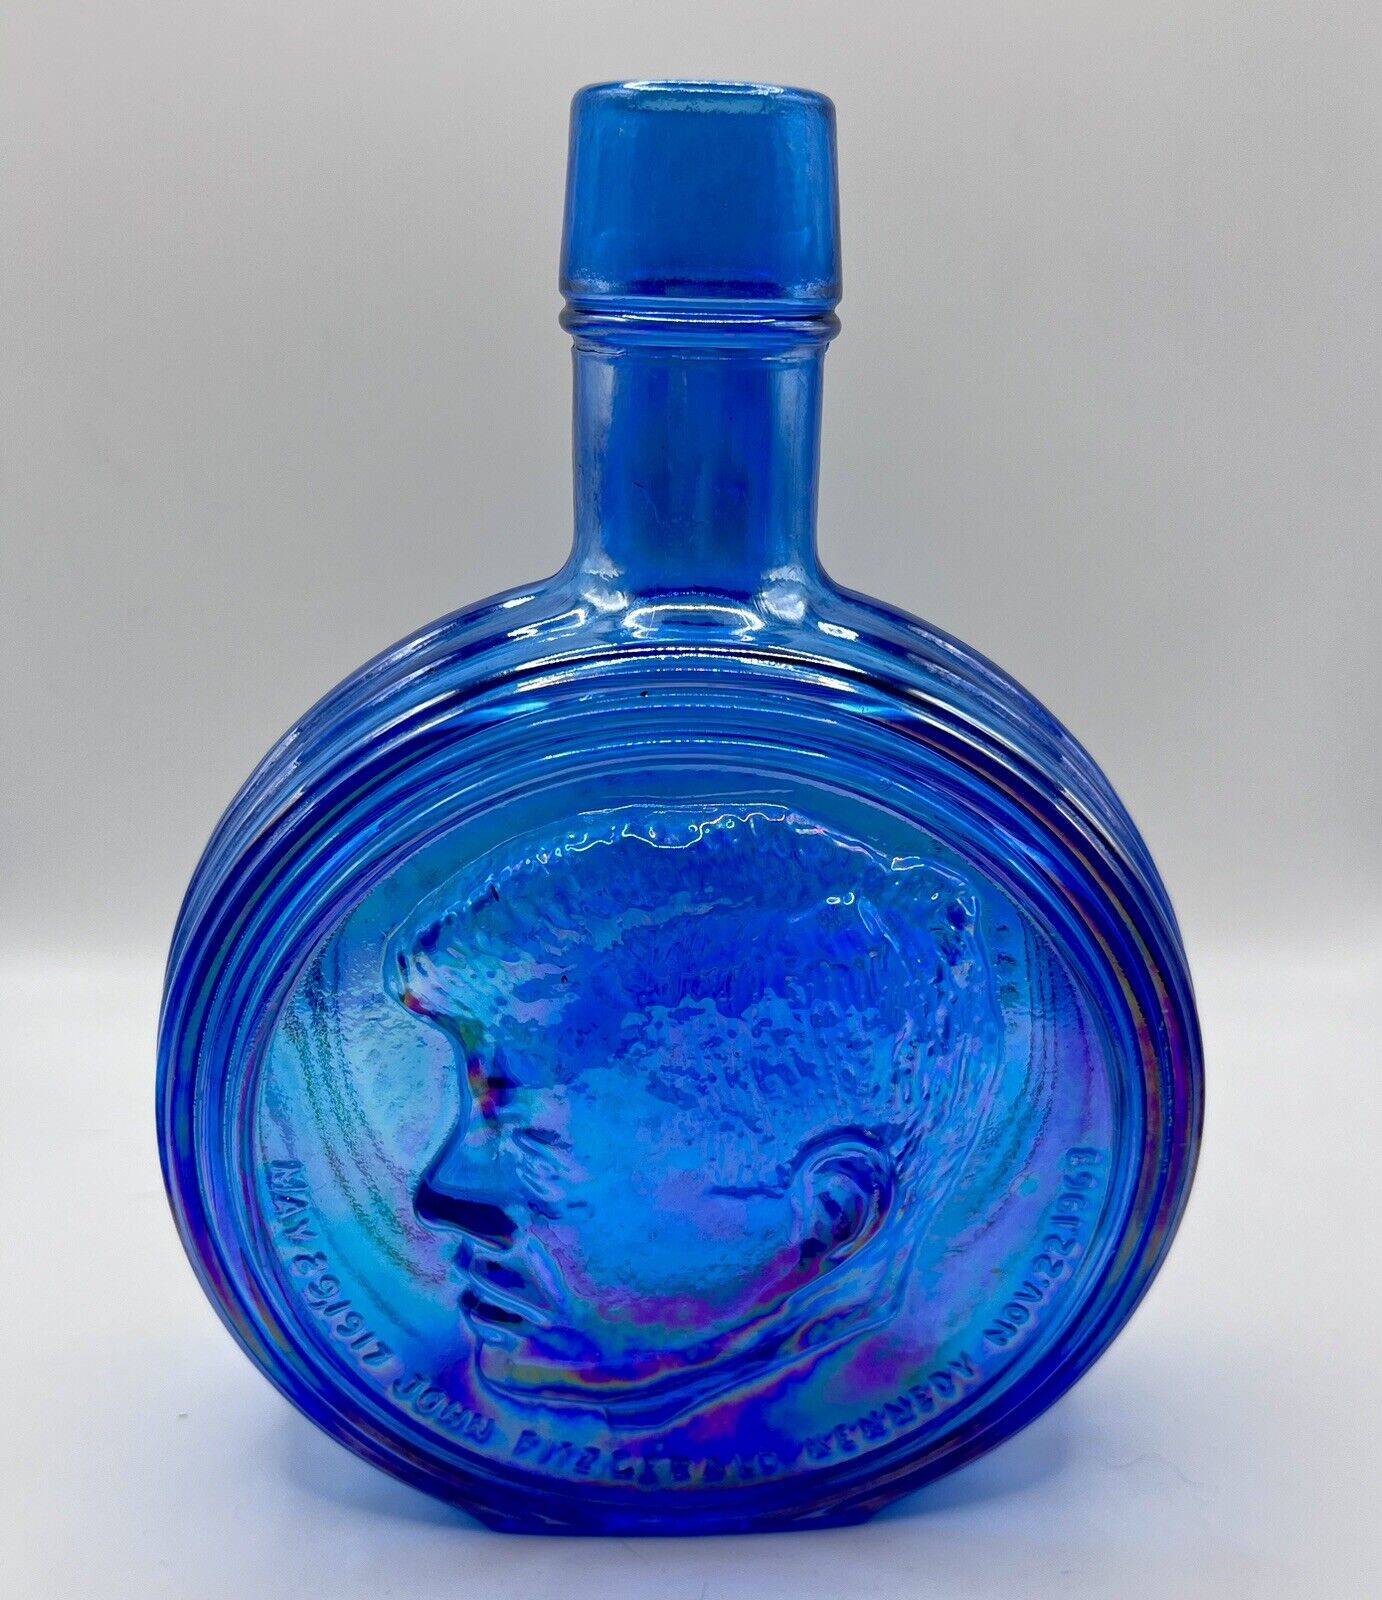 VTG CARNIVAL GLASS BLUE DECANTER COMMEMORATIVE JFK President Kennedy Collectible